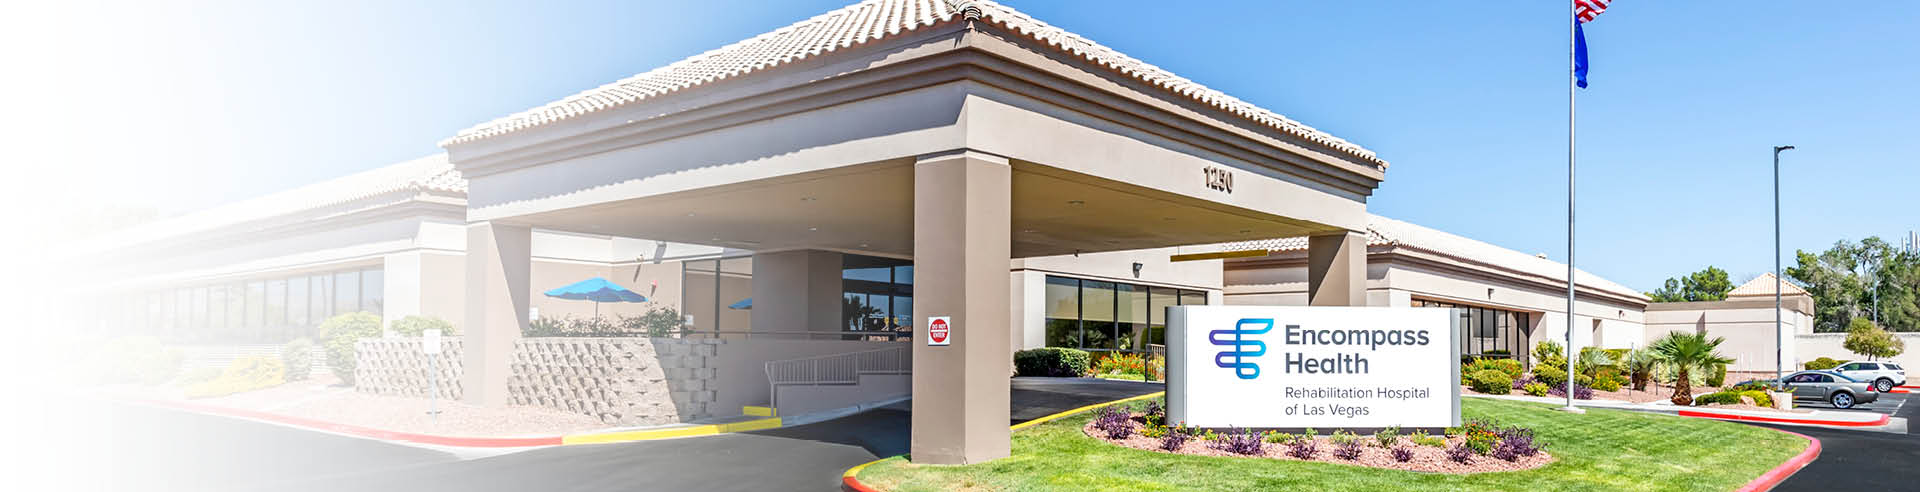  Encompass Health Rehabilitation Hospital of Las Vegas exterior